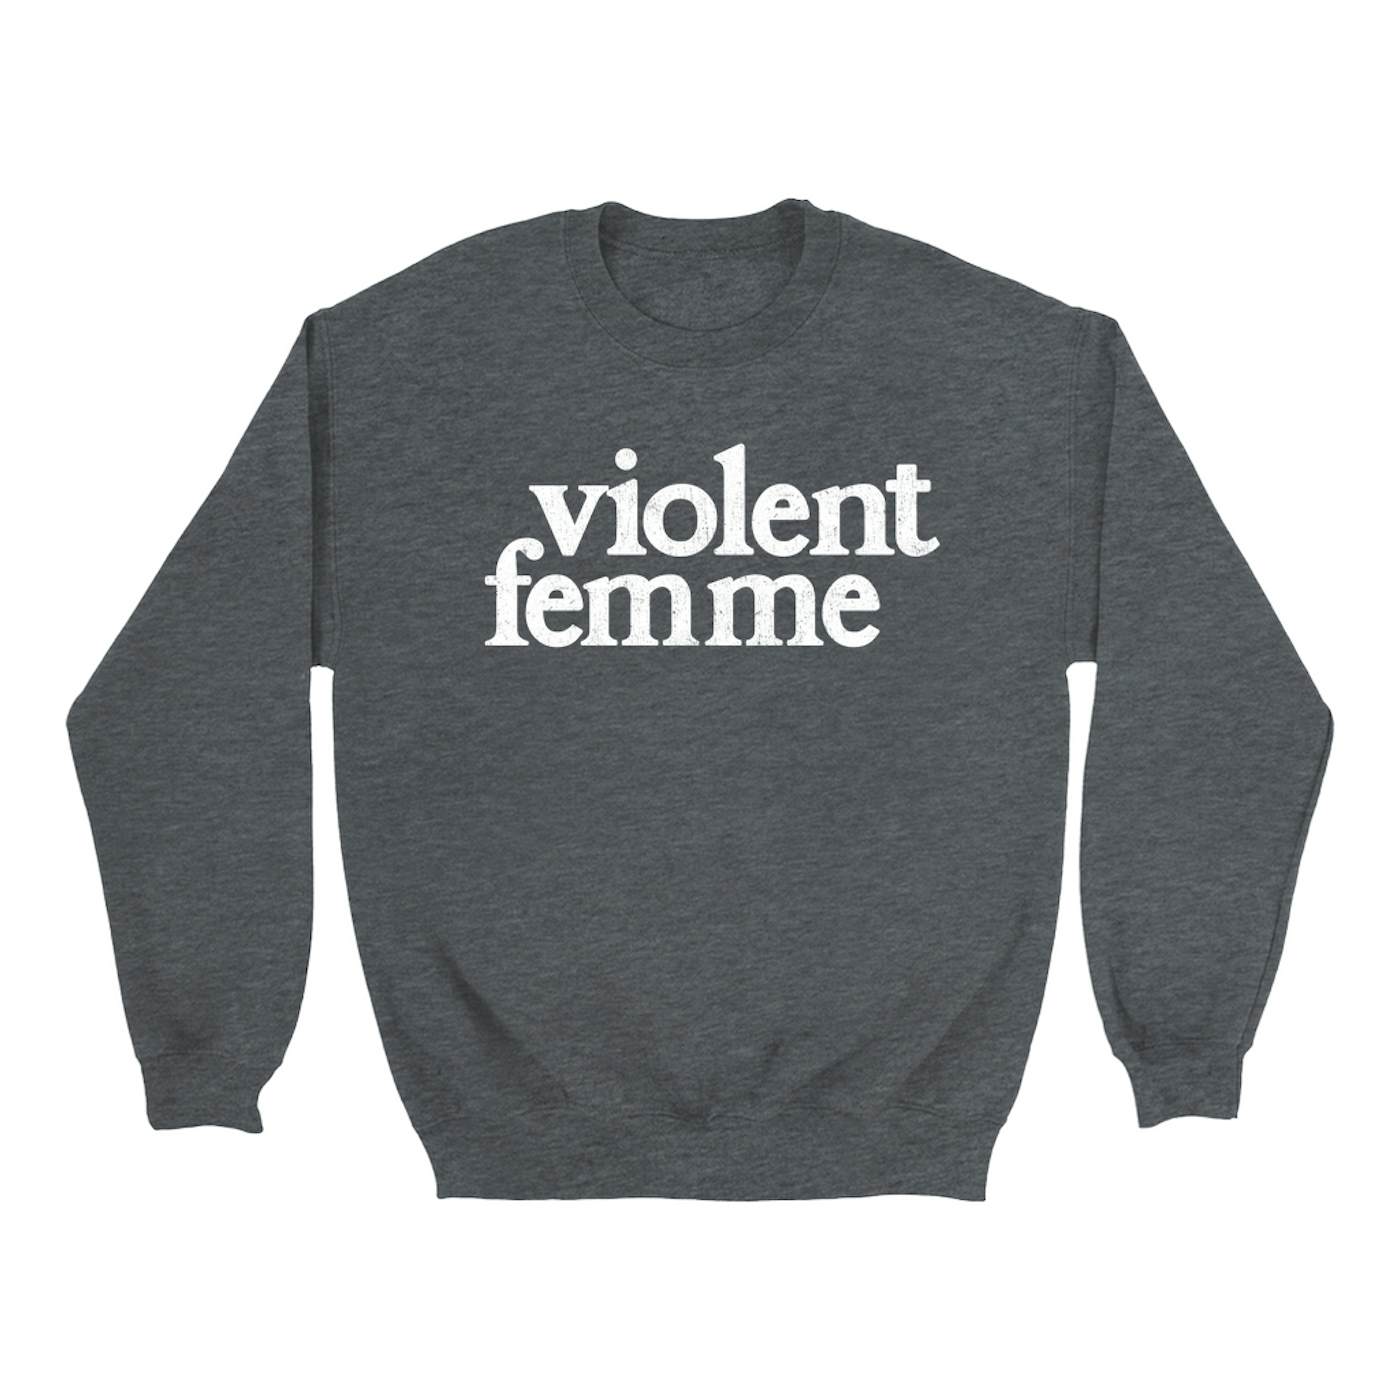 Vince Staples Sweatshirt | Violent Femme Worn By Vince Staples Sweatshirt